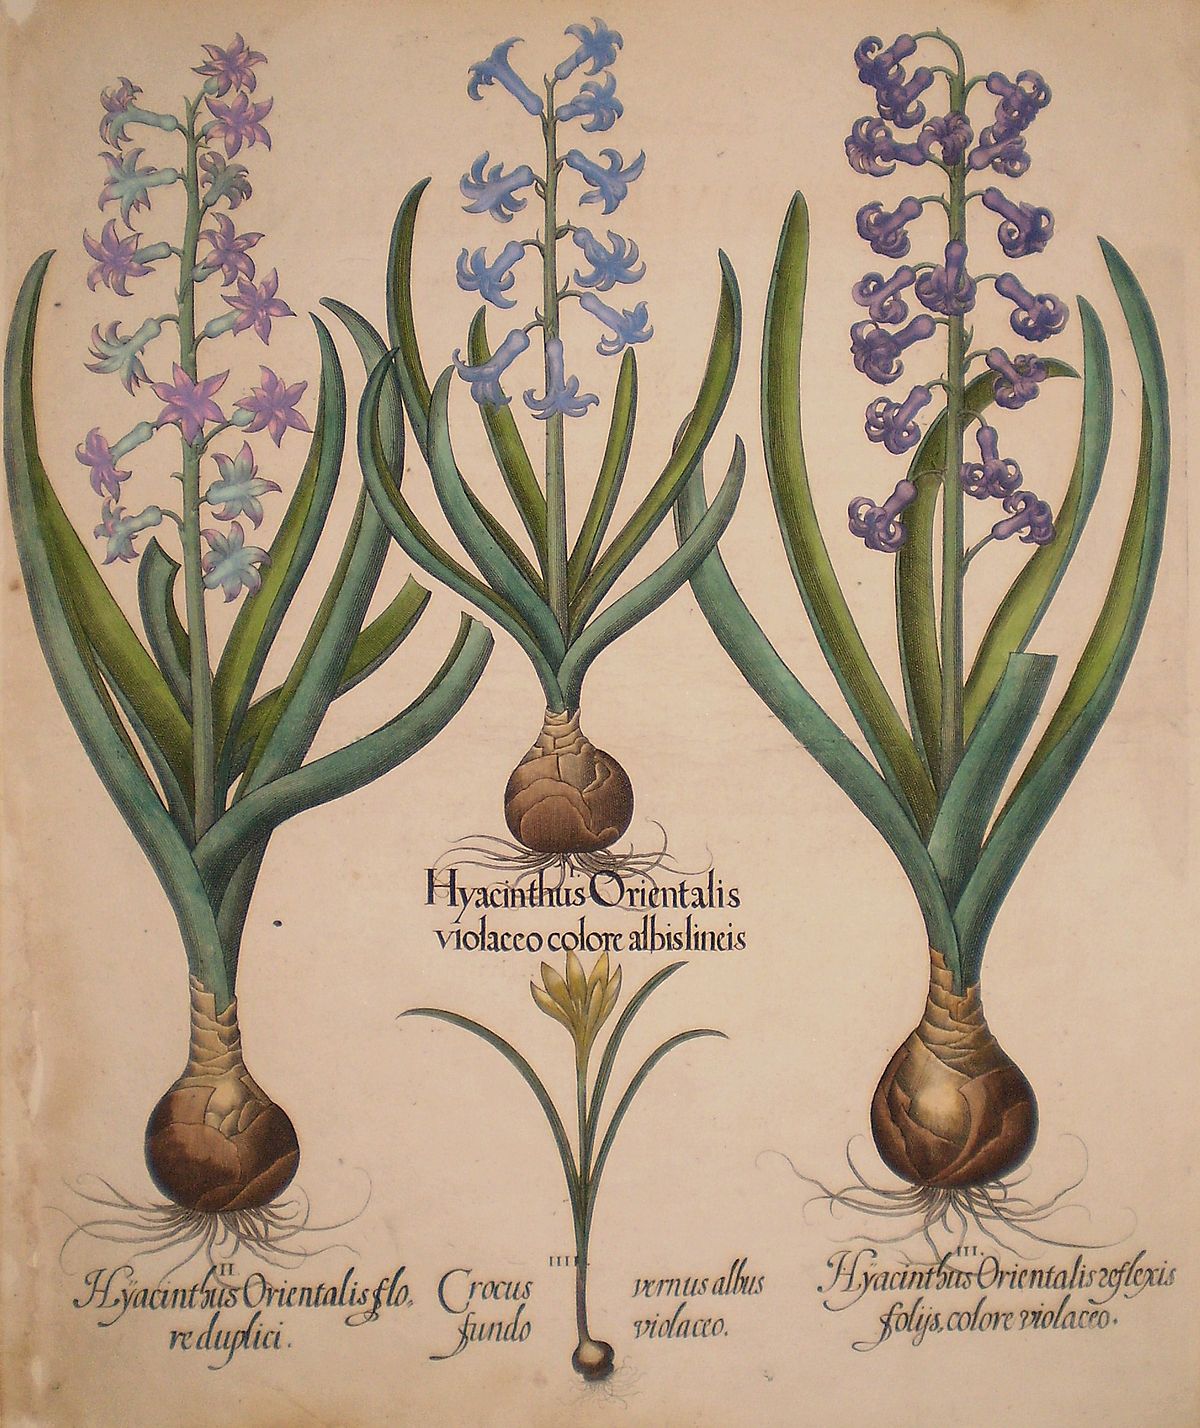 File:Hyacinthus orientalis floreduplici-Hyacinthus orientalis 